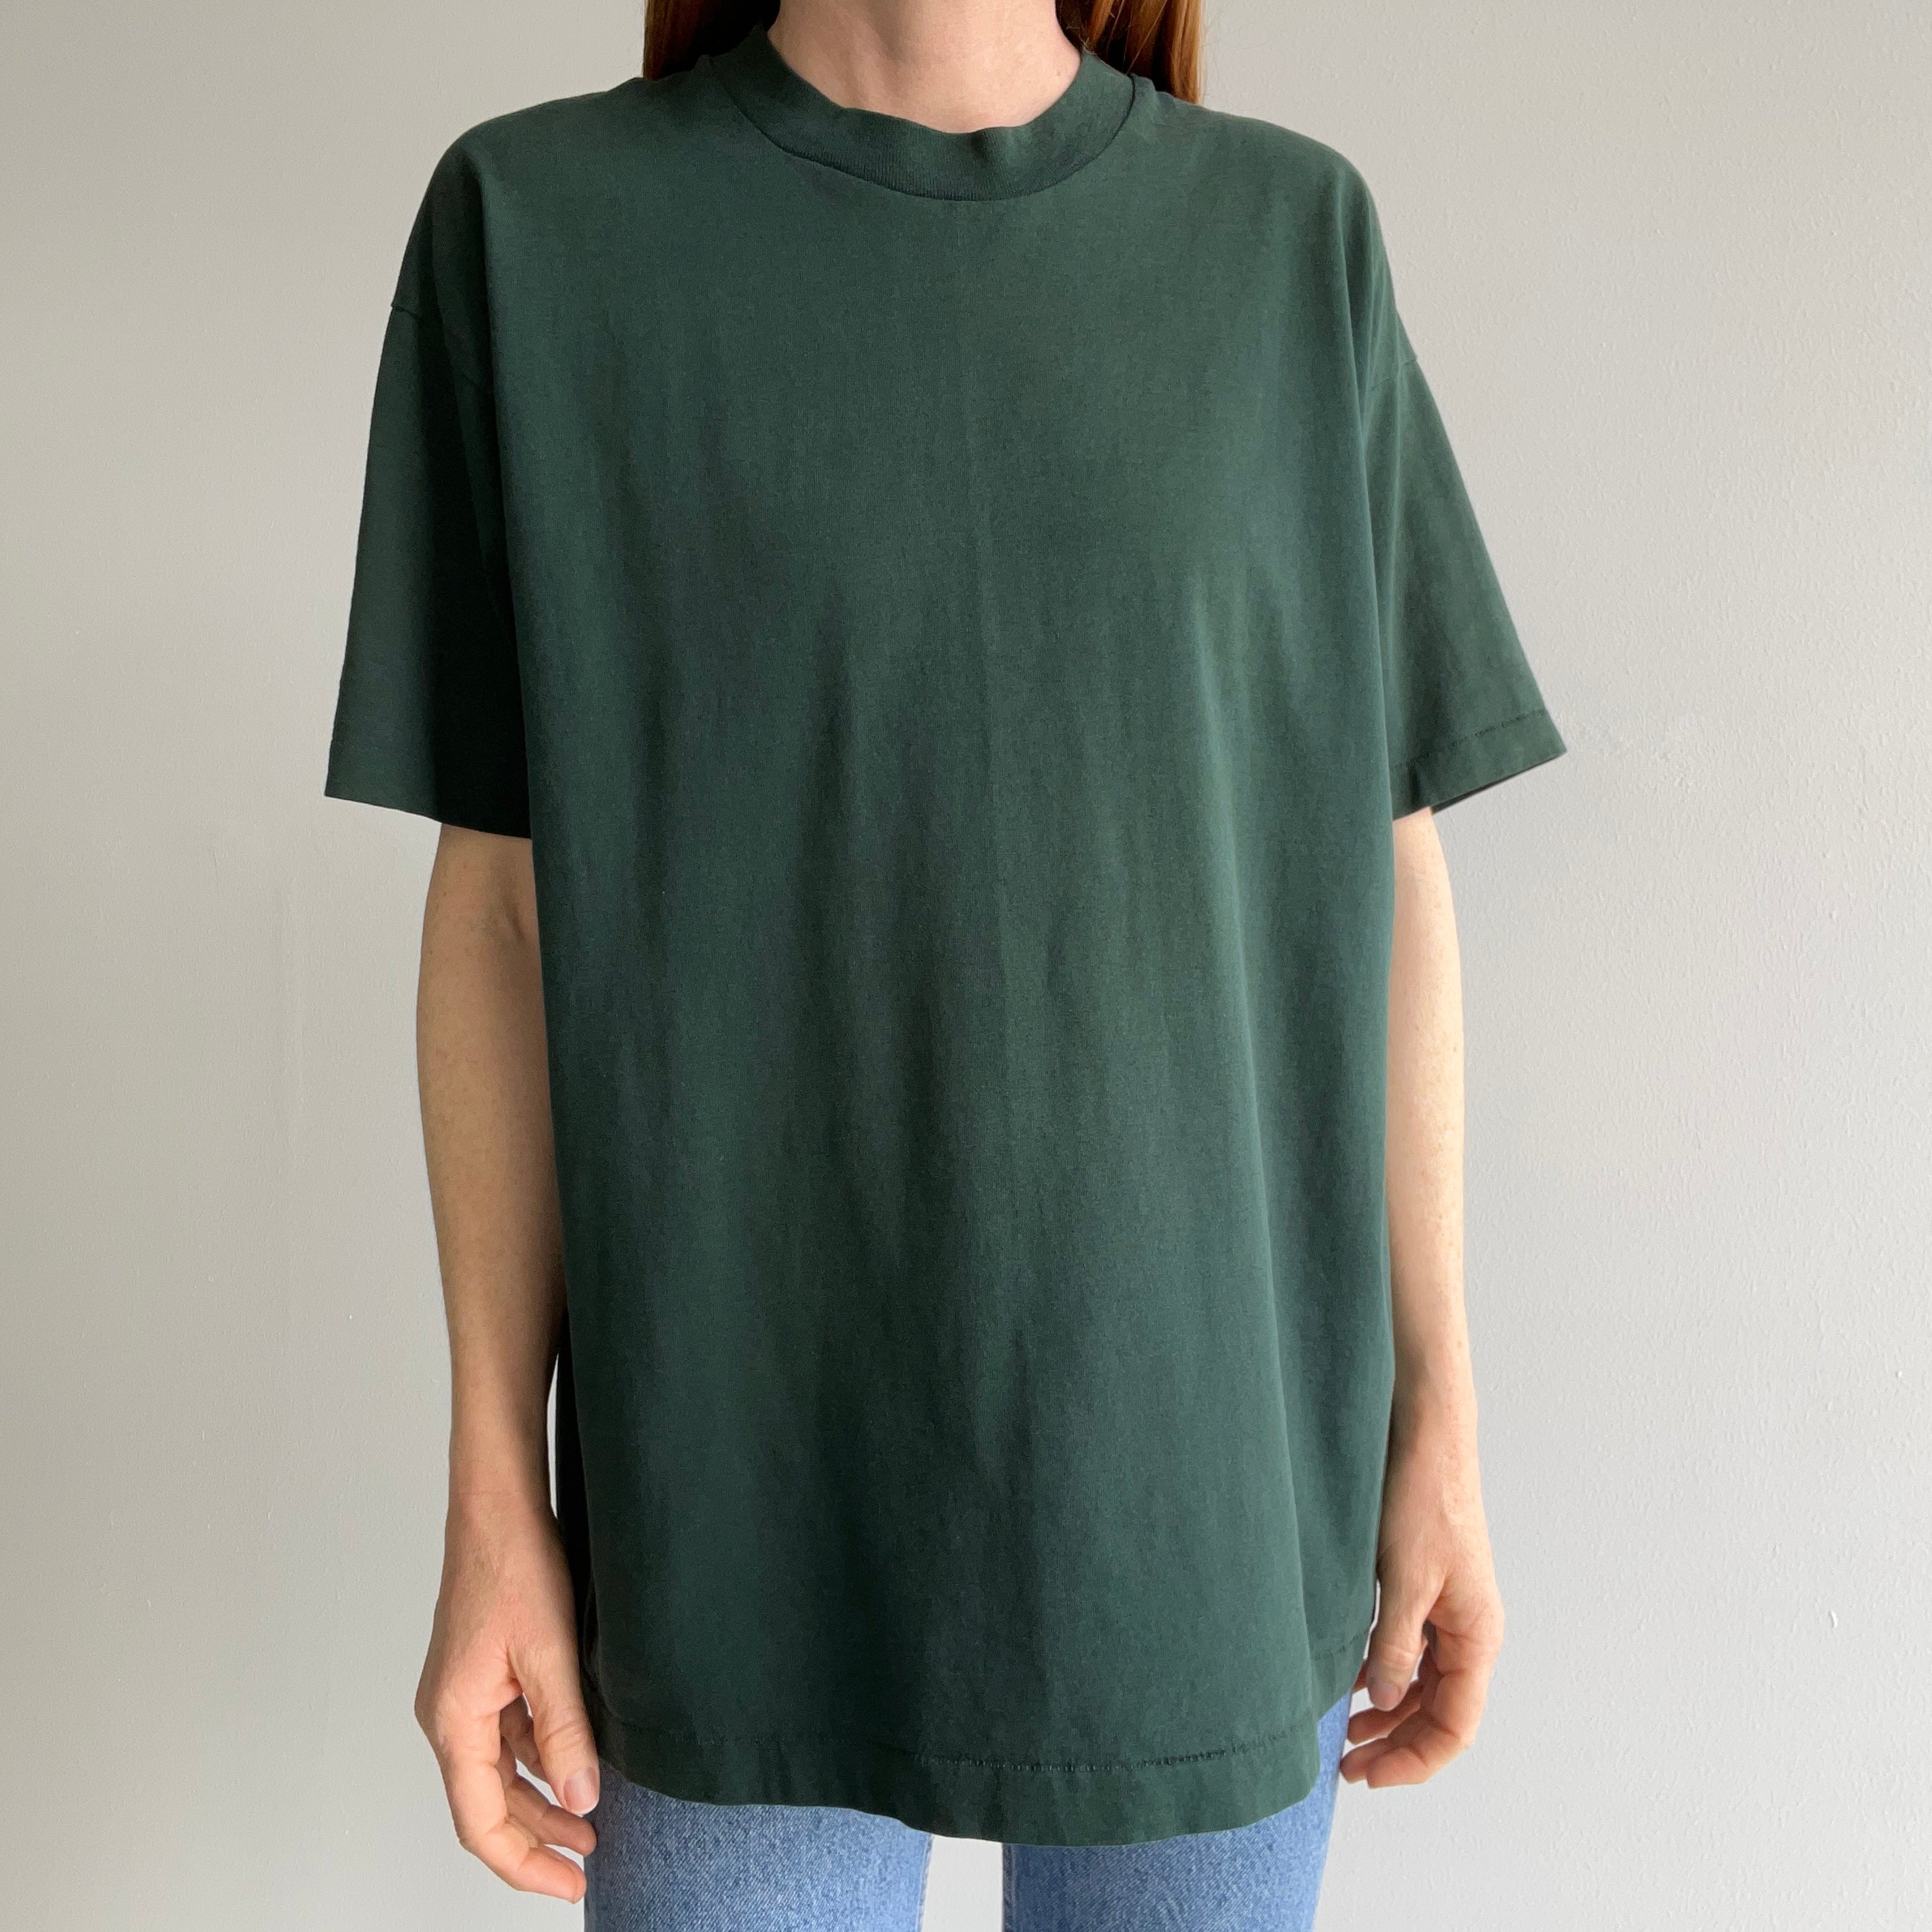 1980s Dark Green T-Shirt by FOTL Best